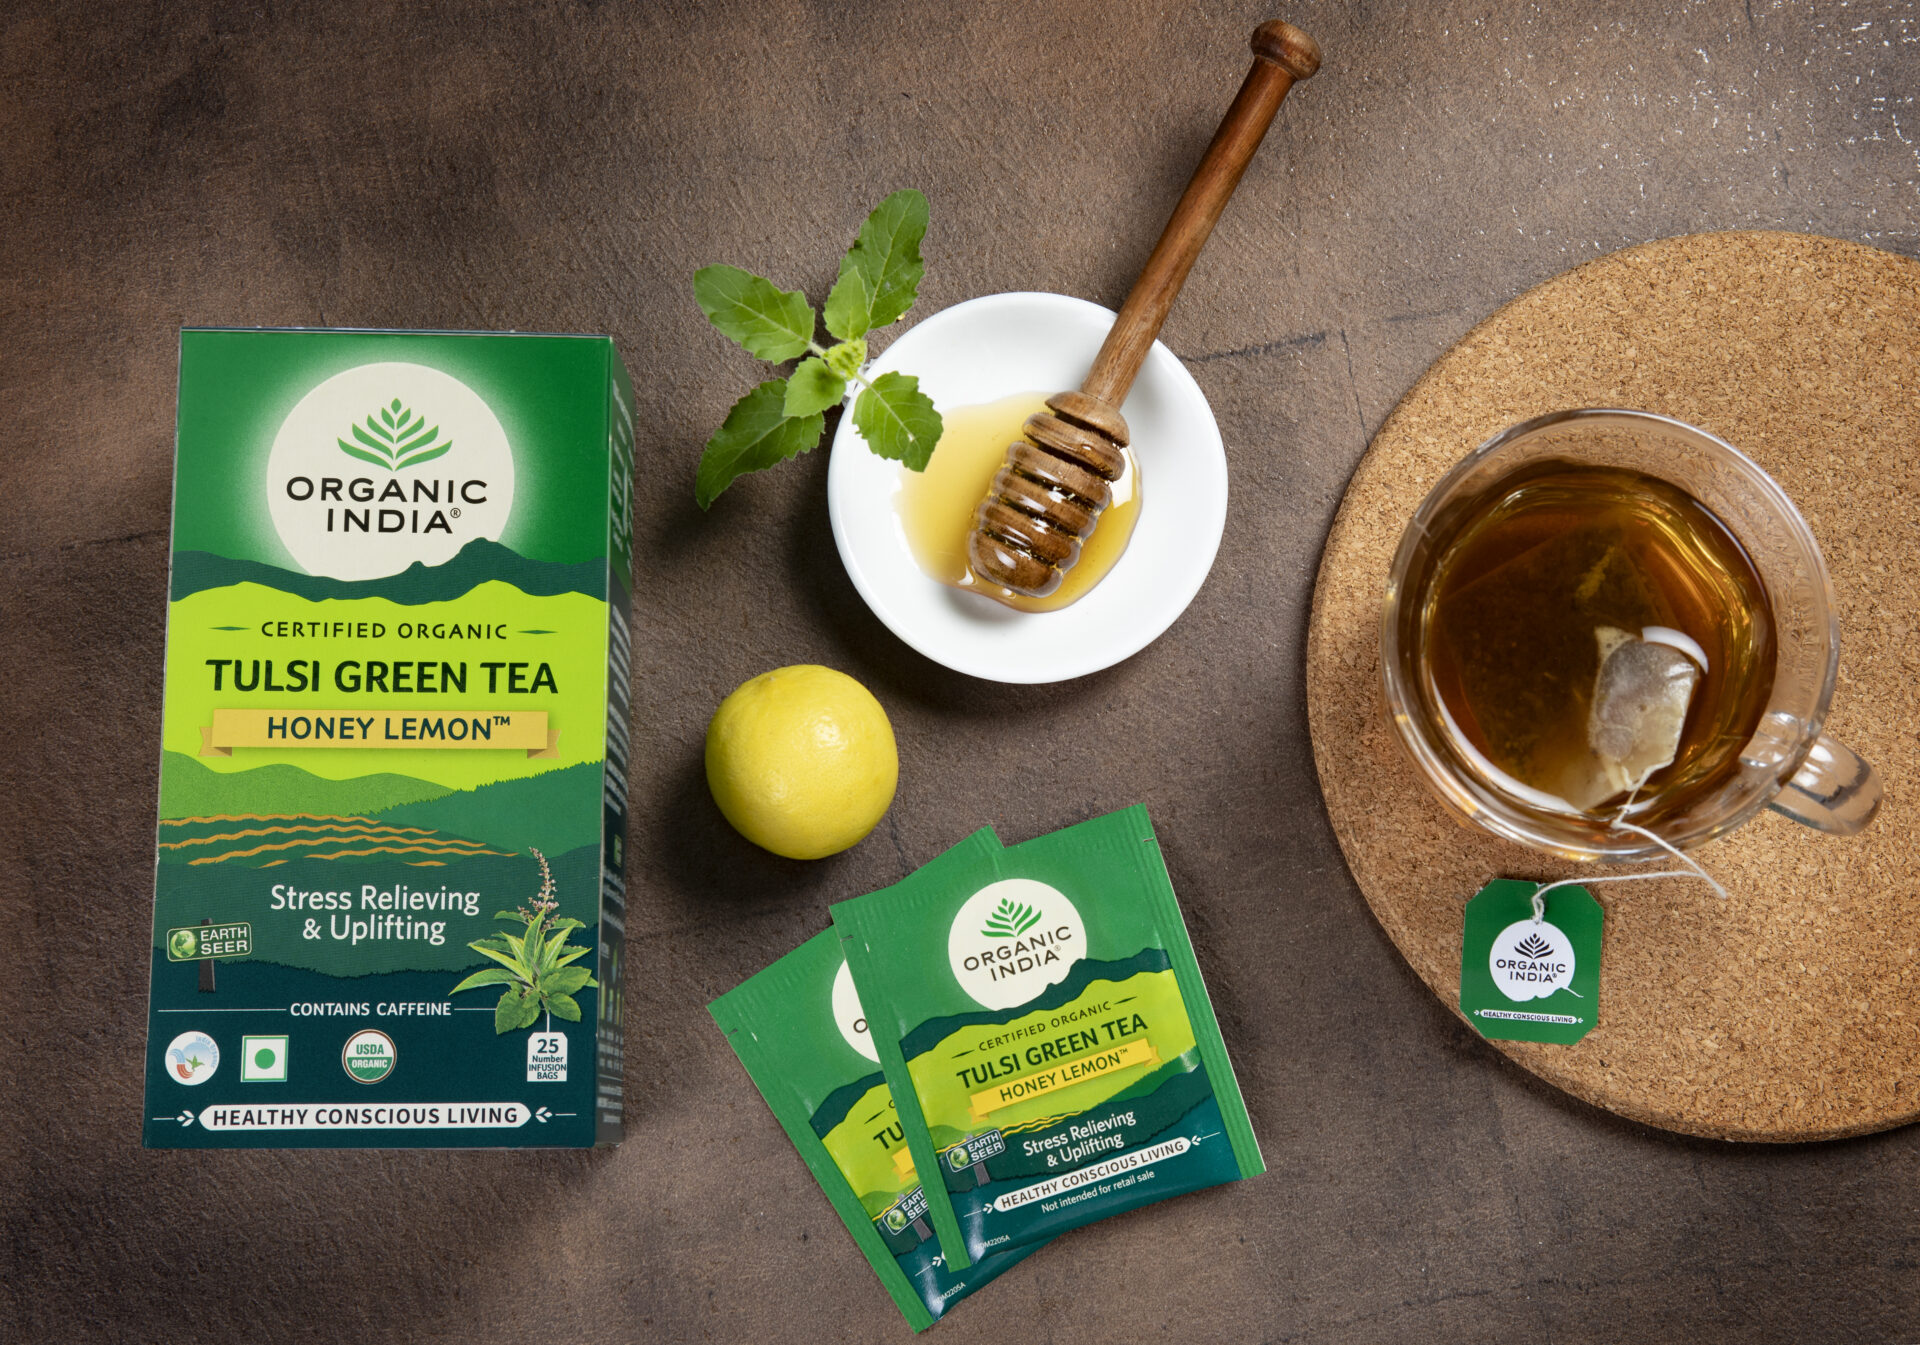 Organic India – Tulsi Green Tea Honey Lemon 25 Teabags